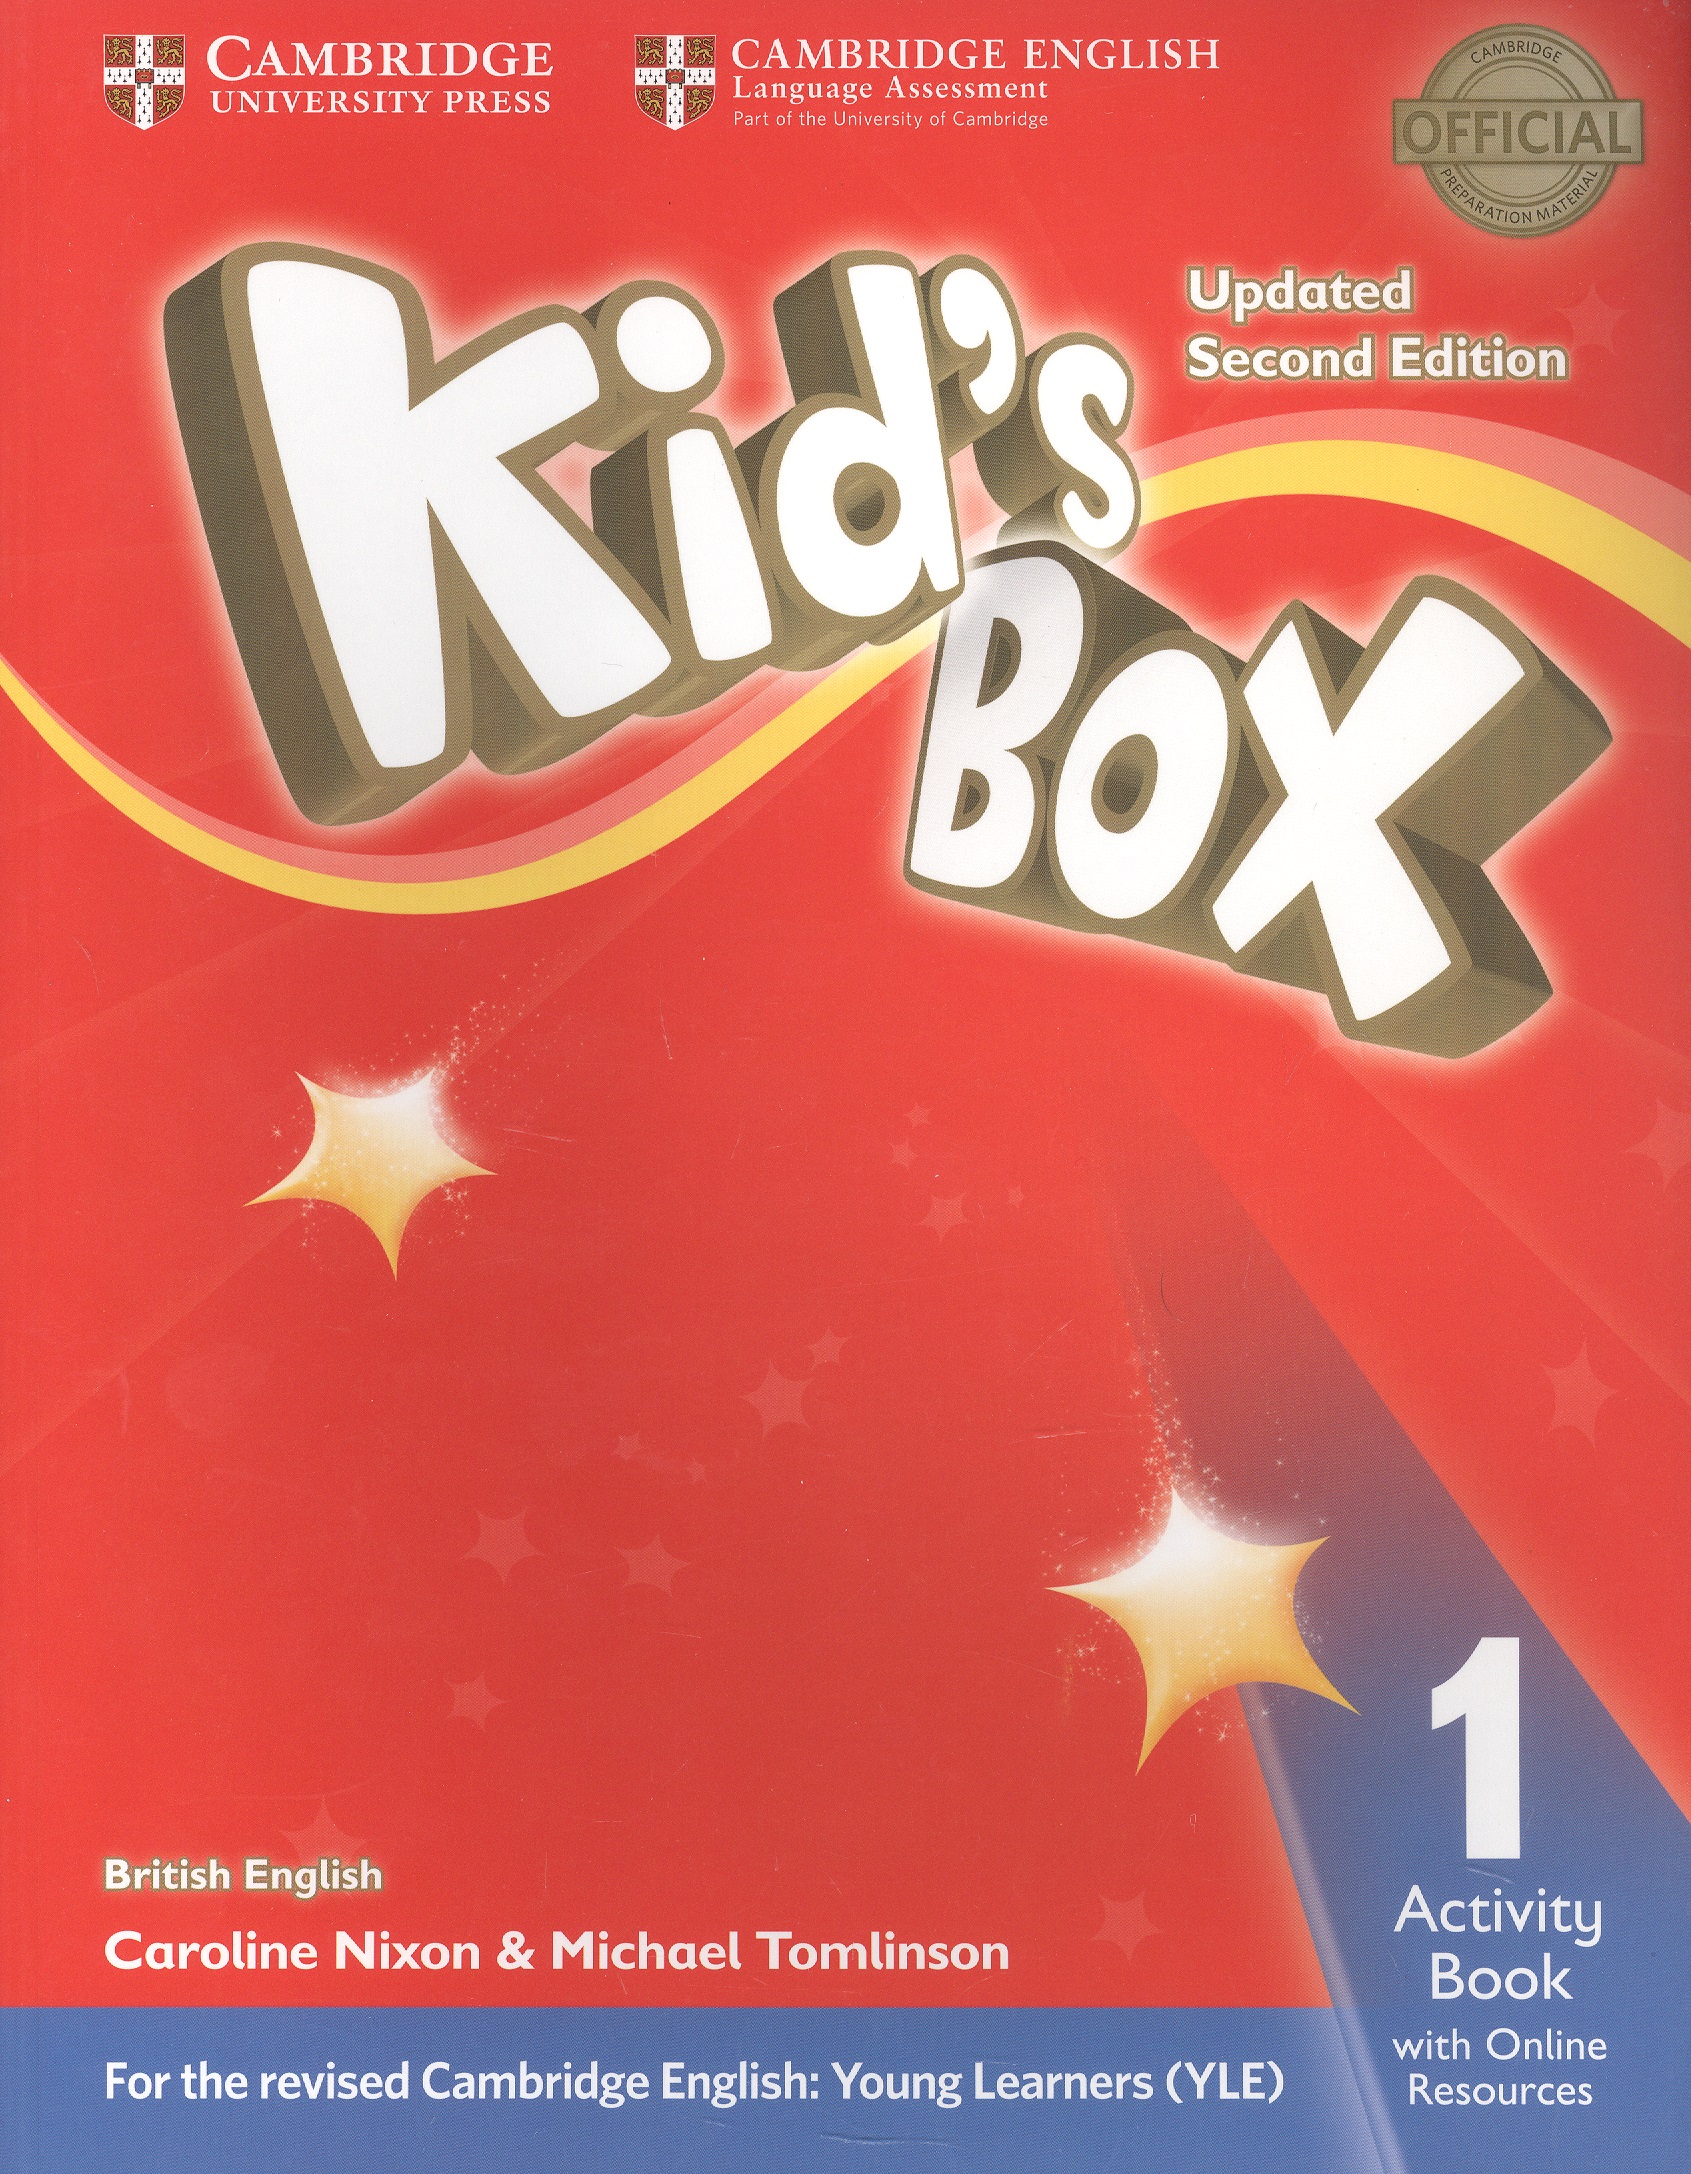 Kids box 4 activity